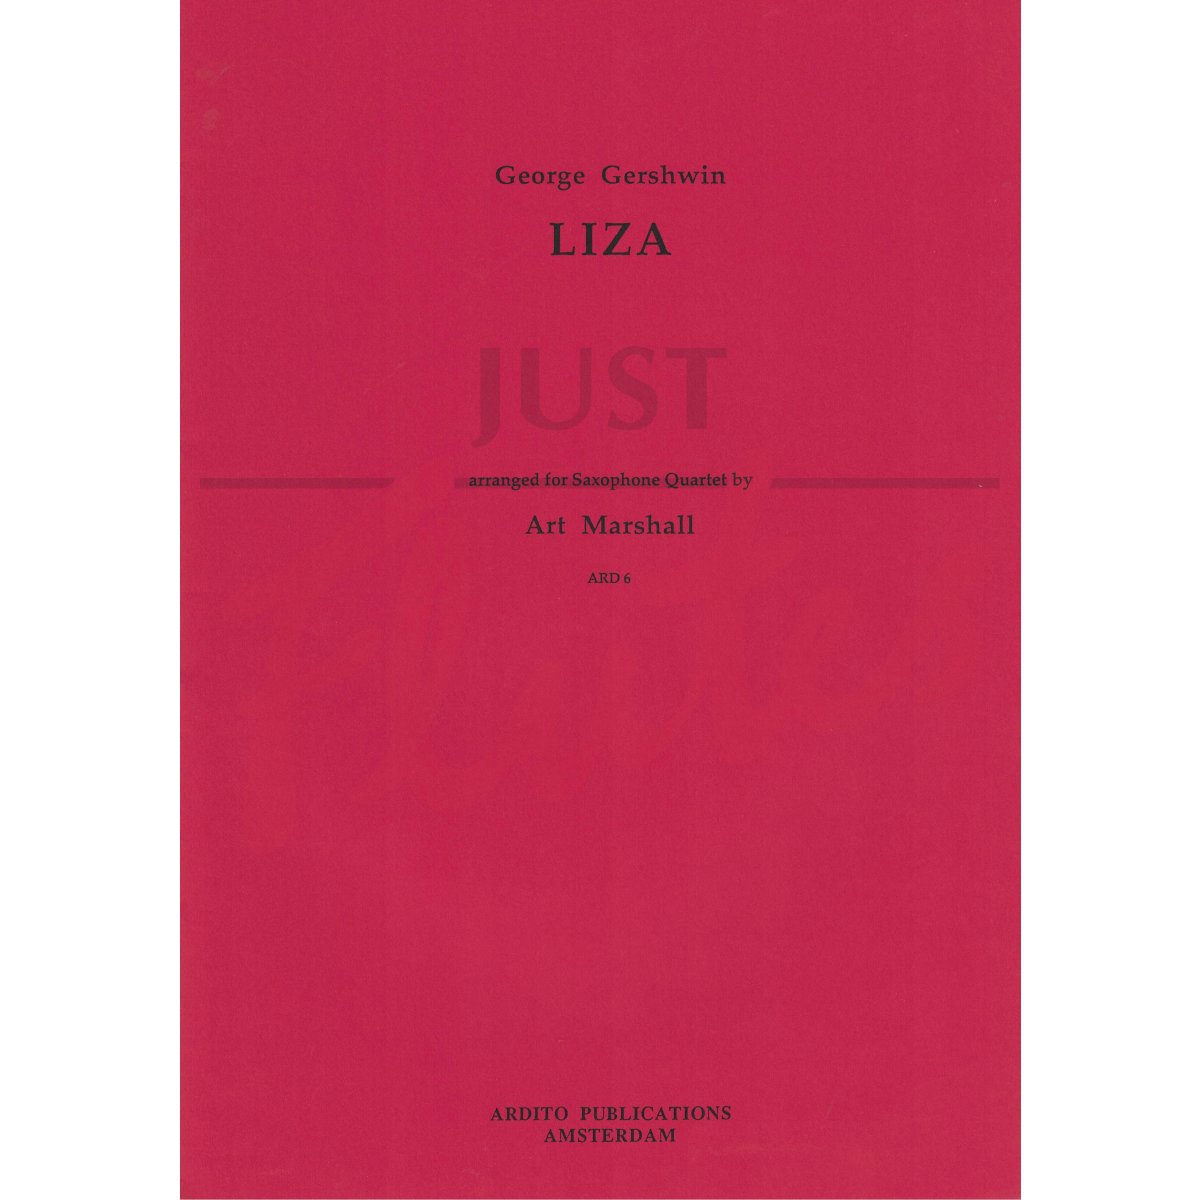 Liza for Saxophone Quartet